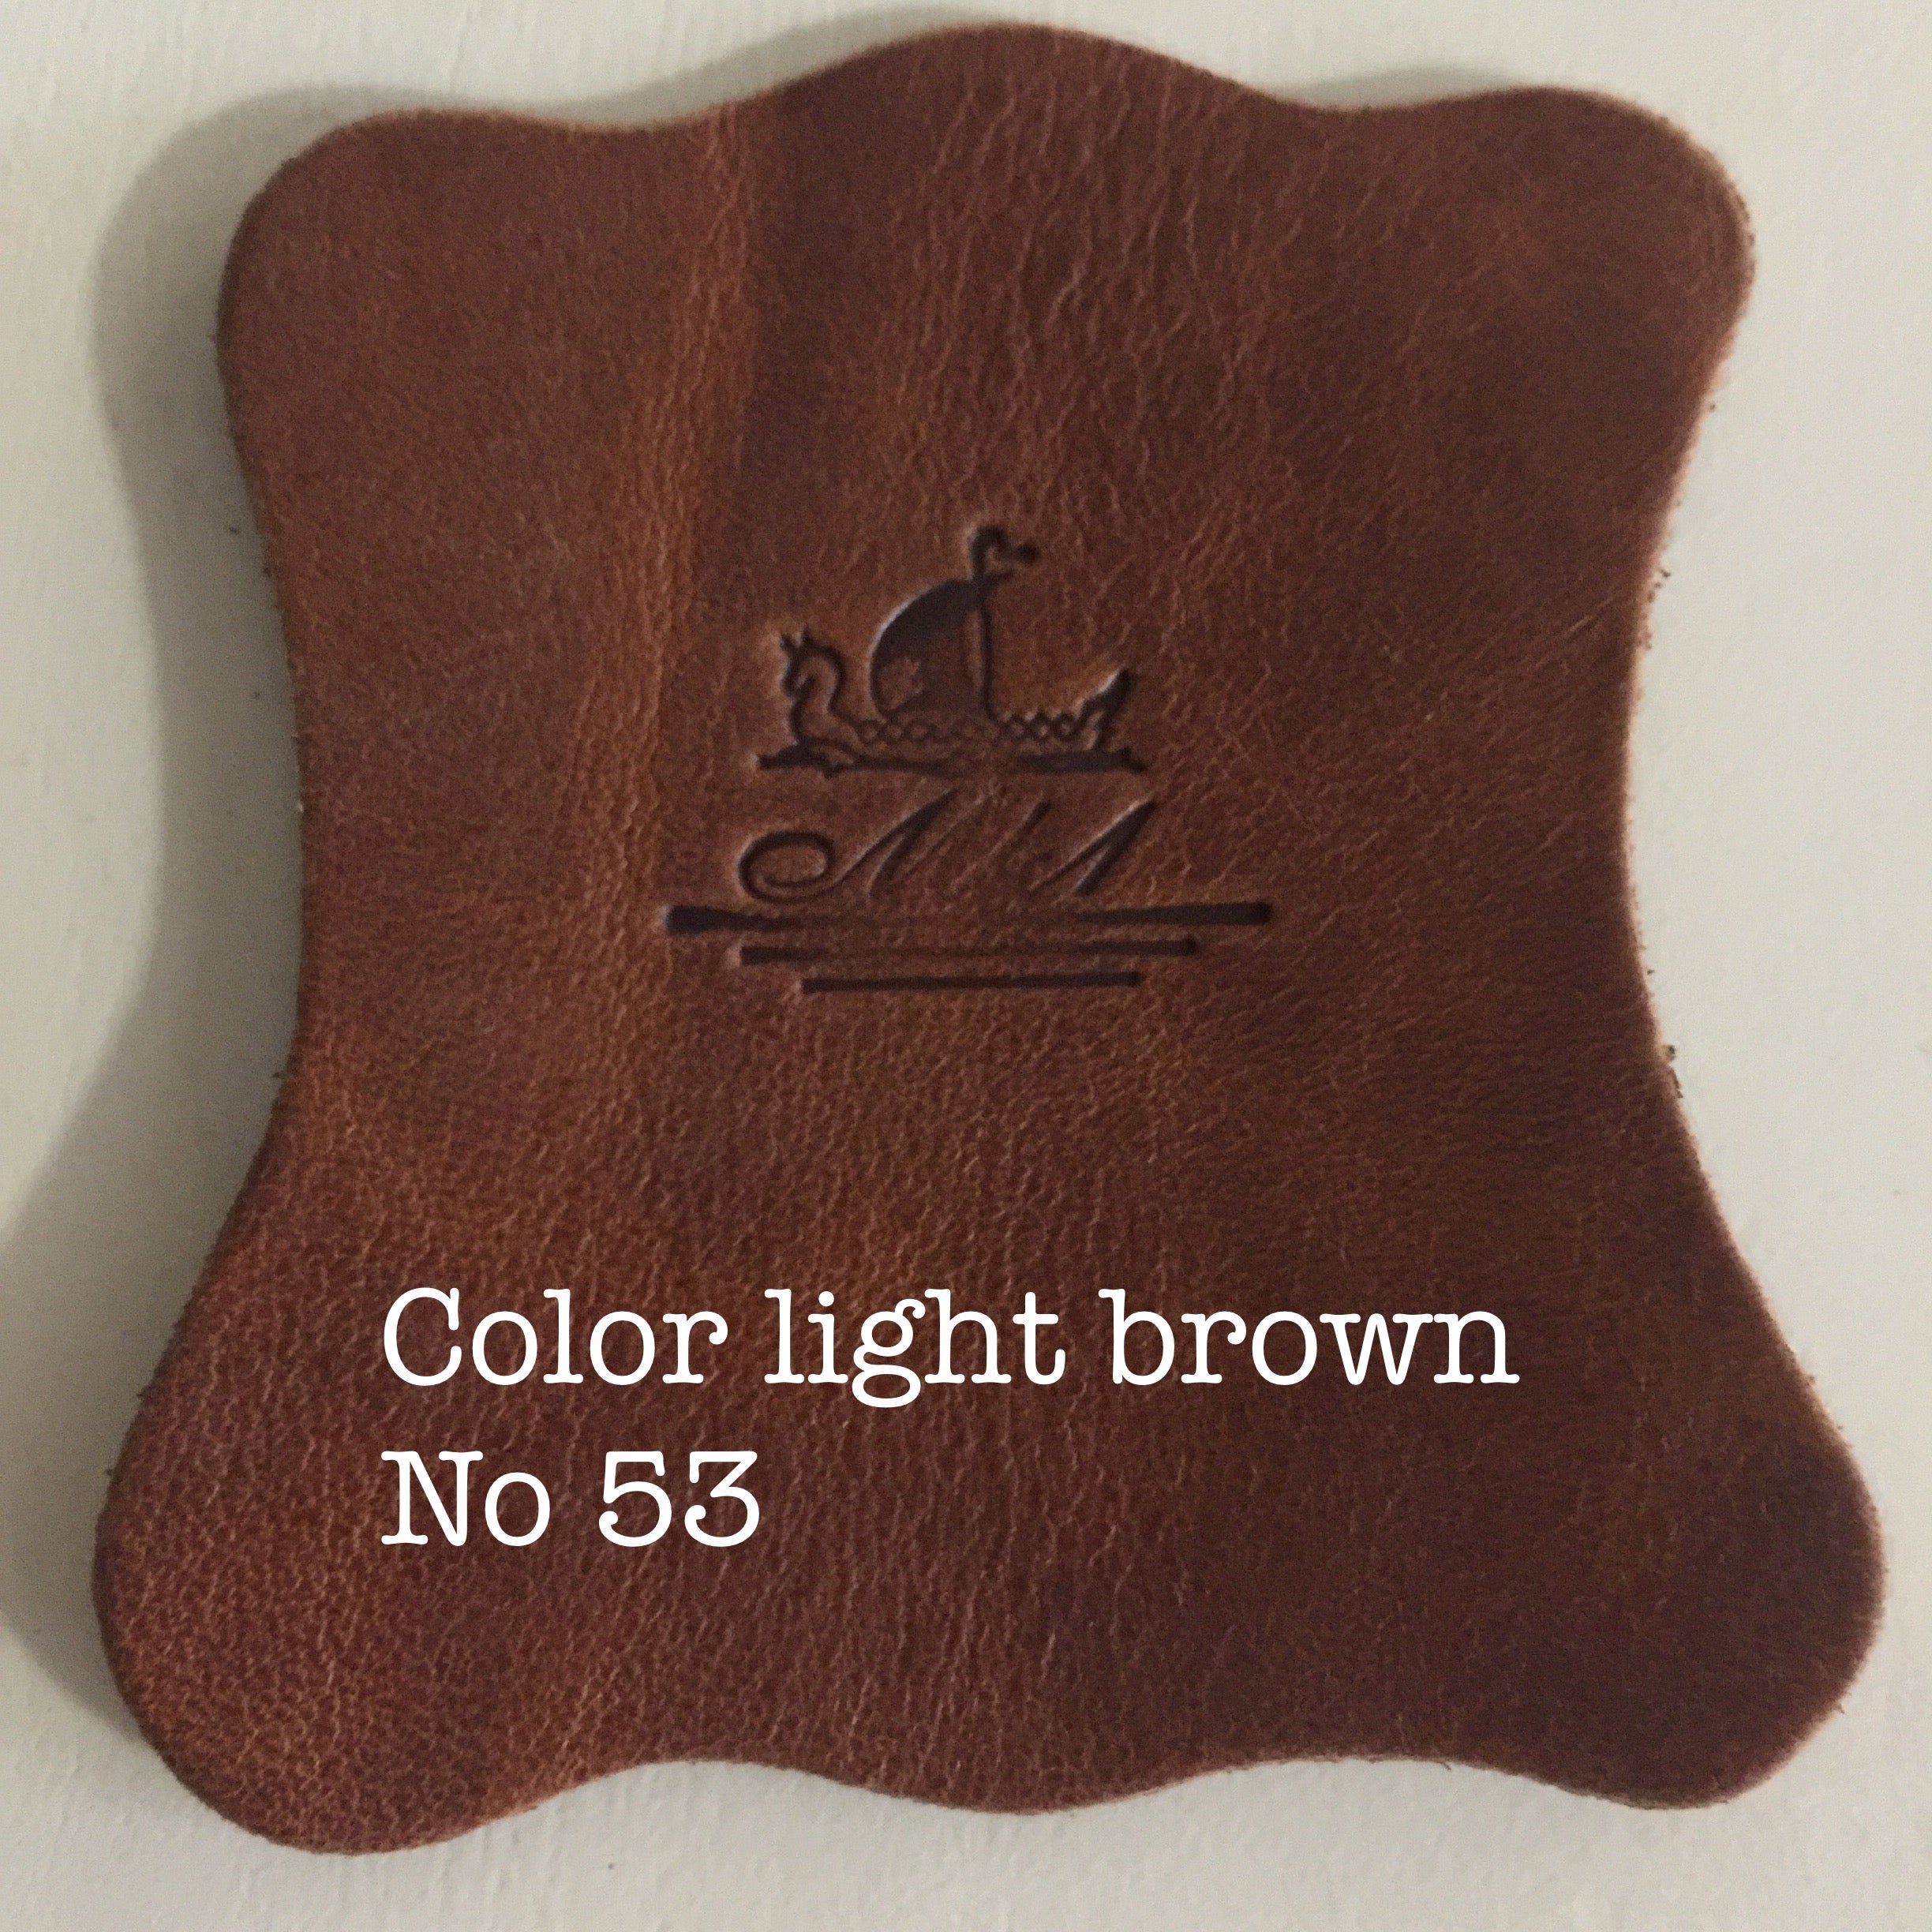 Handmade leather bag wt/52